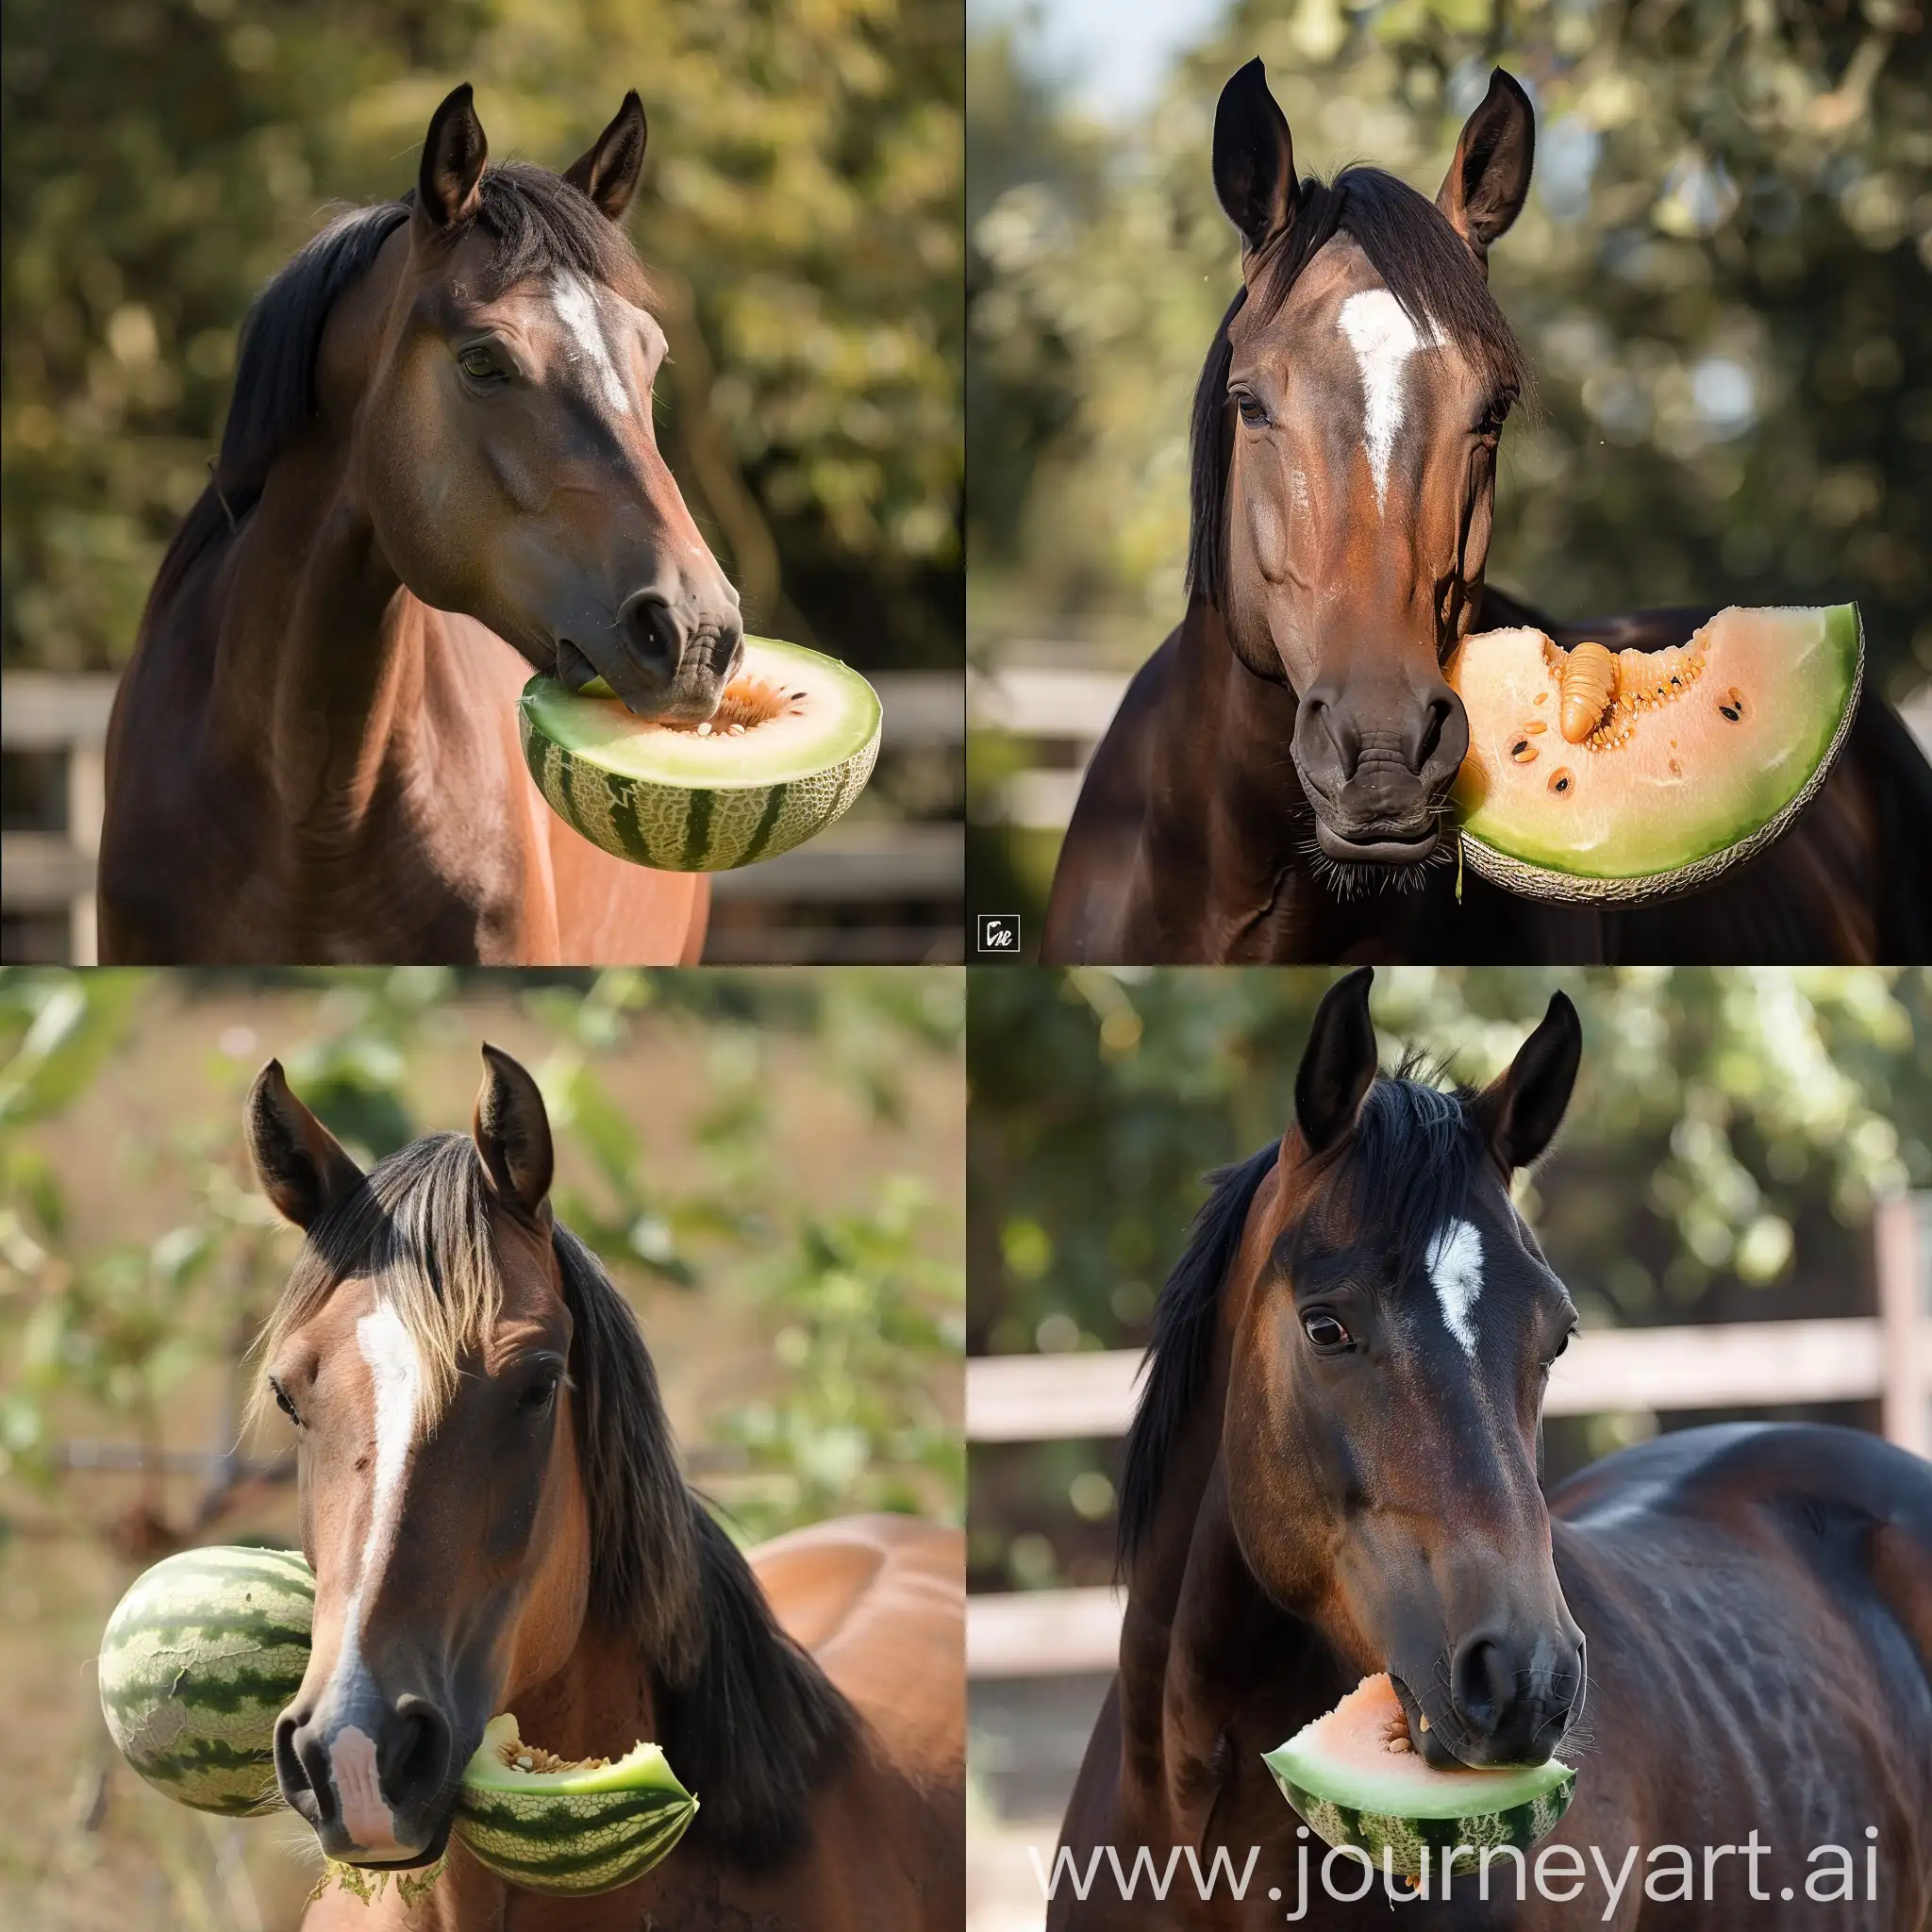 A horse eating a melon